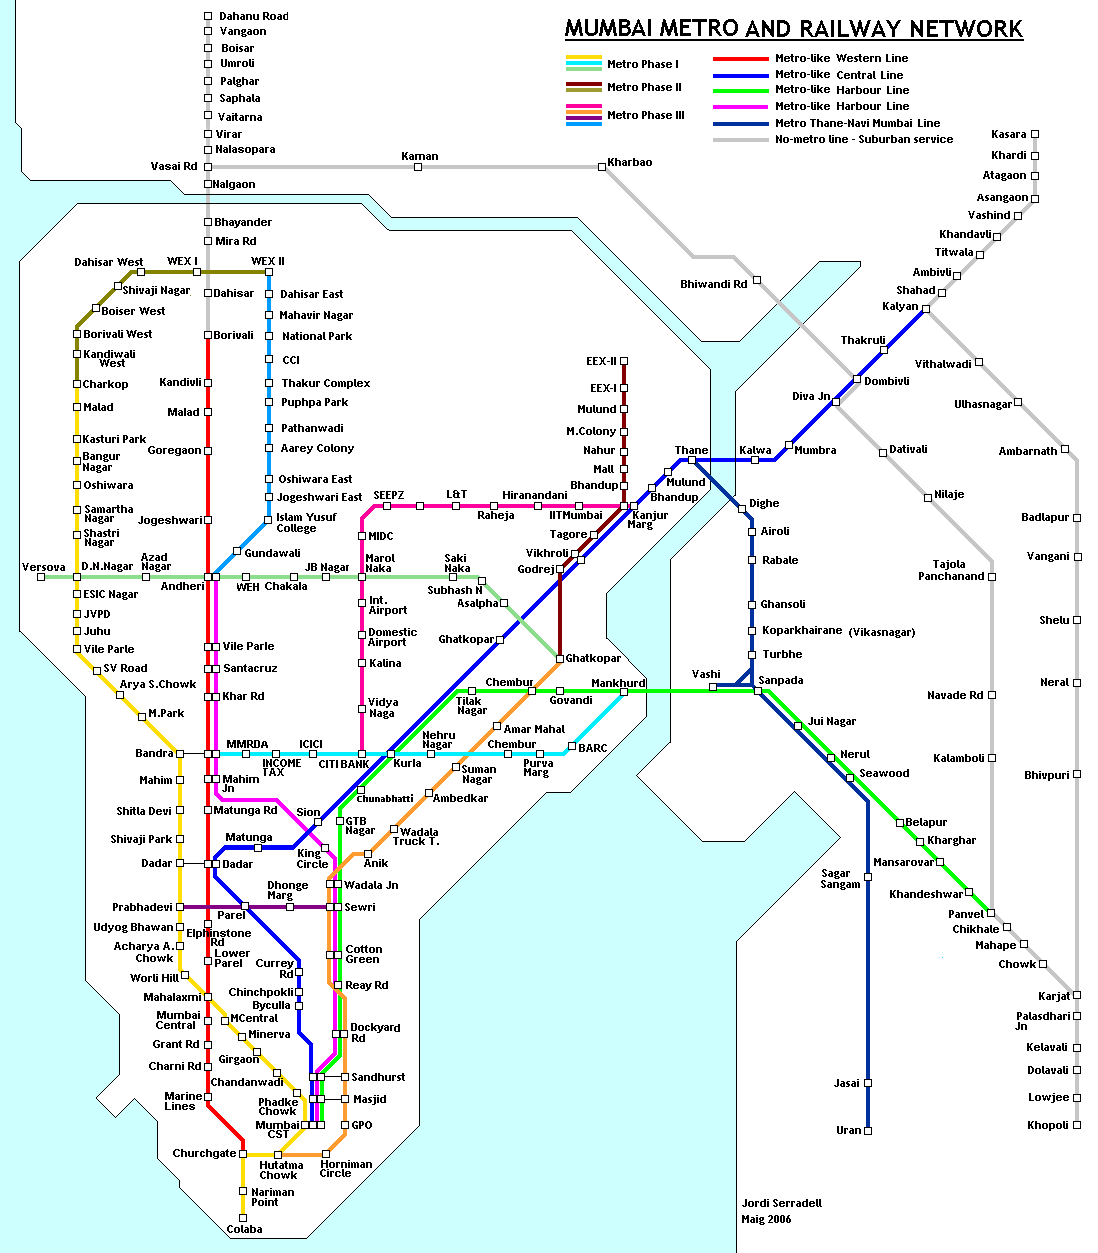 Carte du métro et du tram de Bombay (Mumbai)